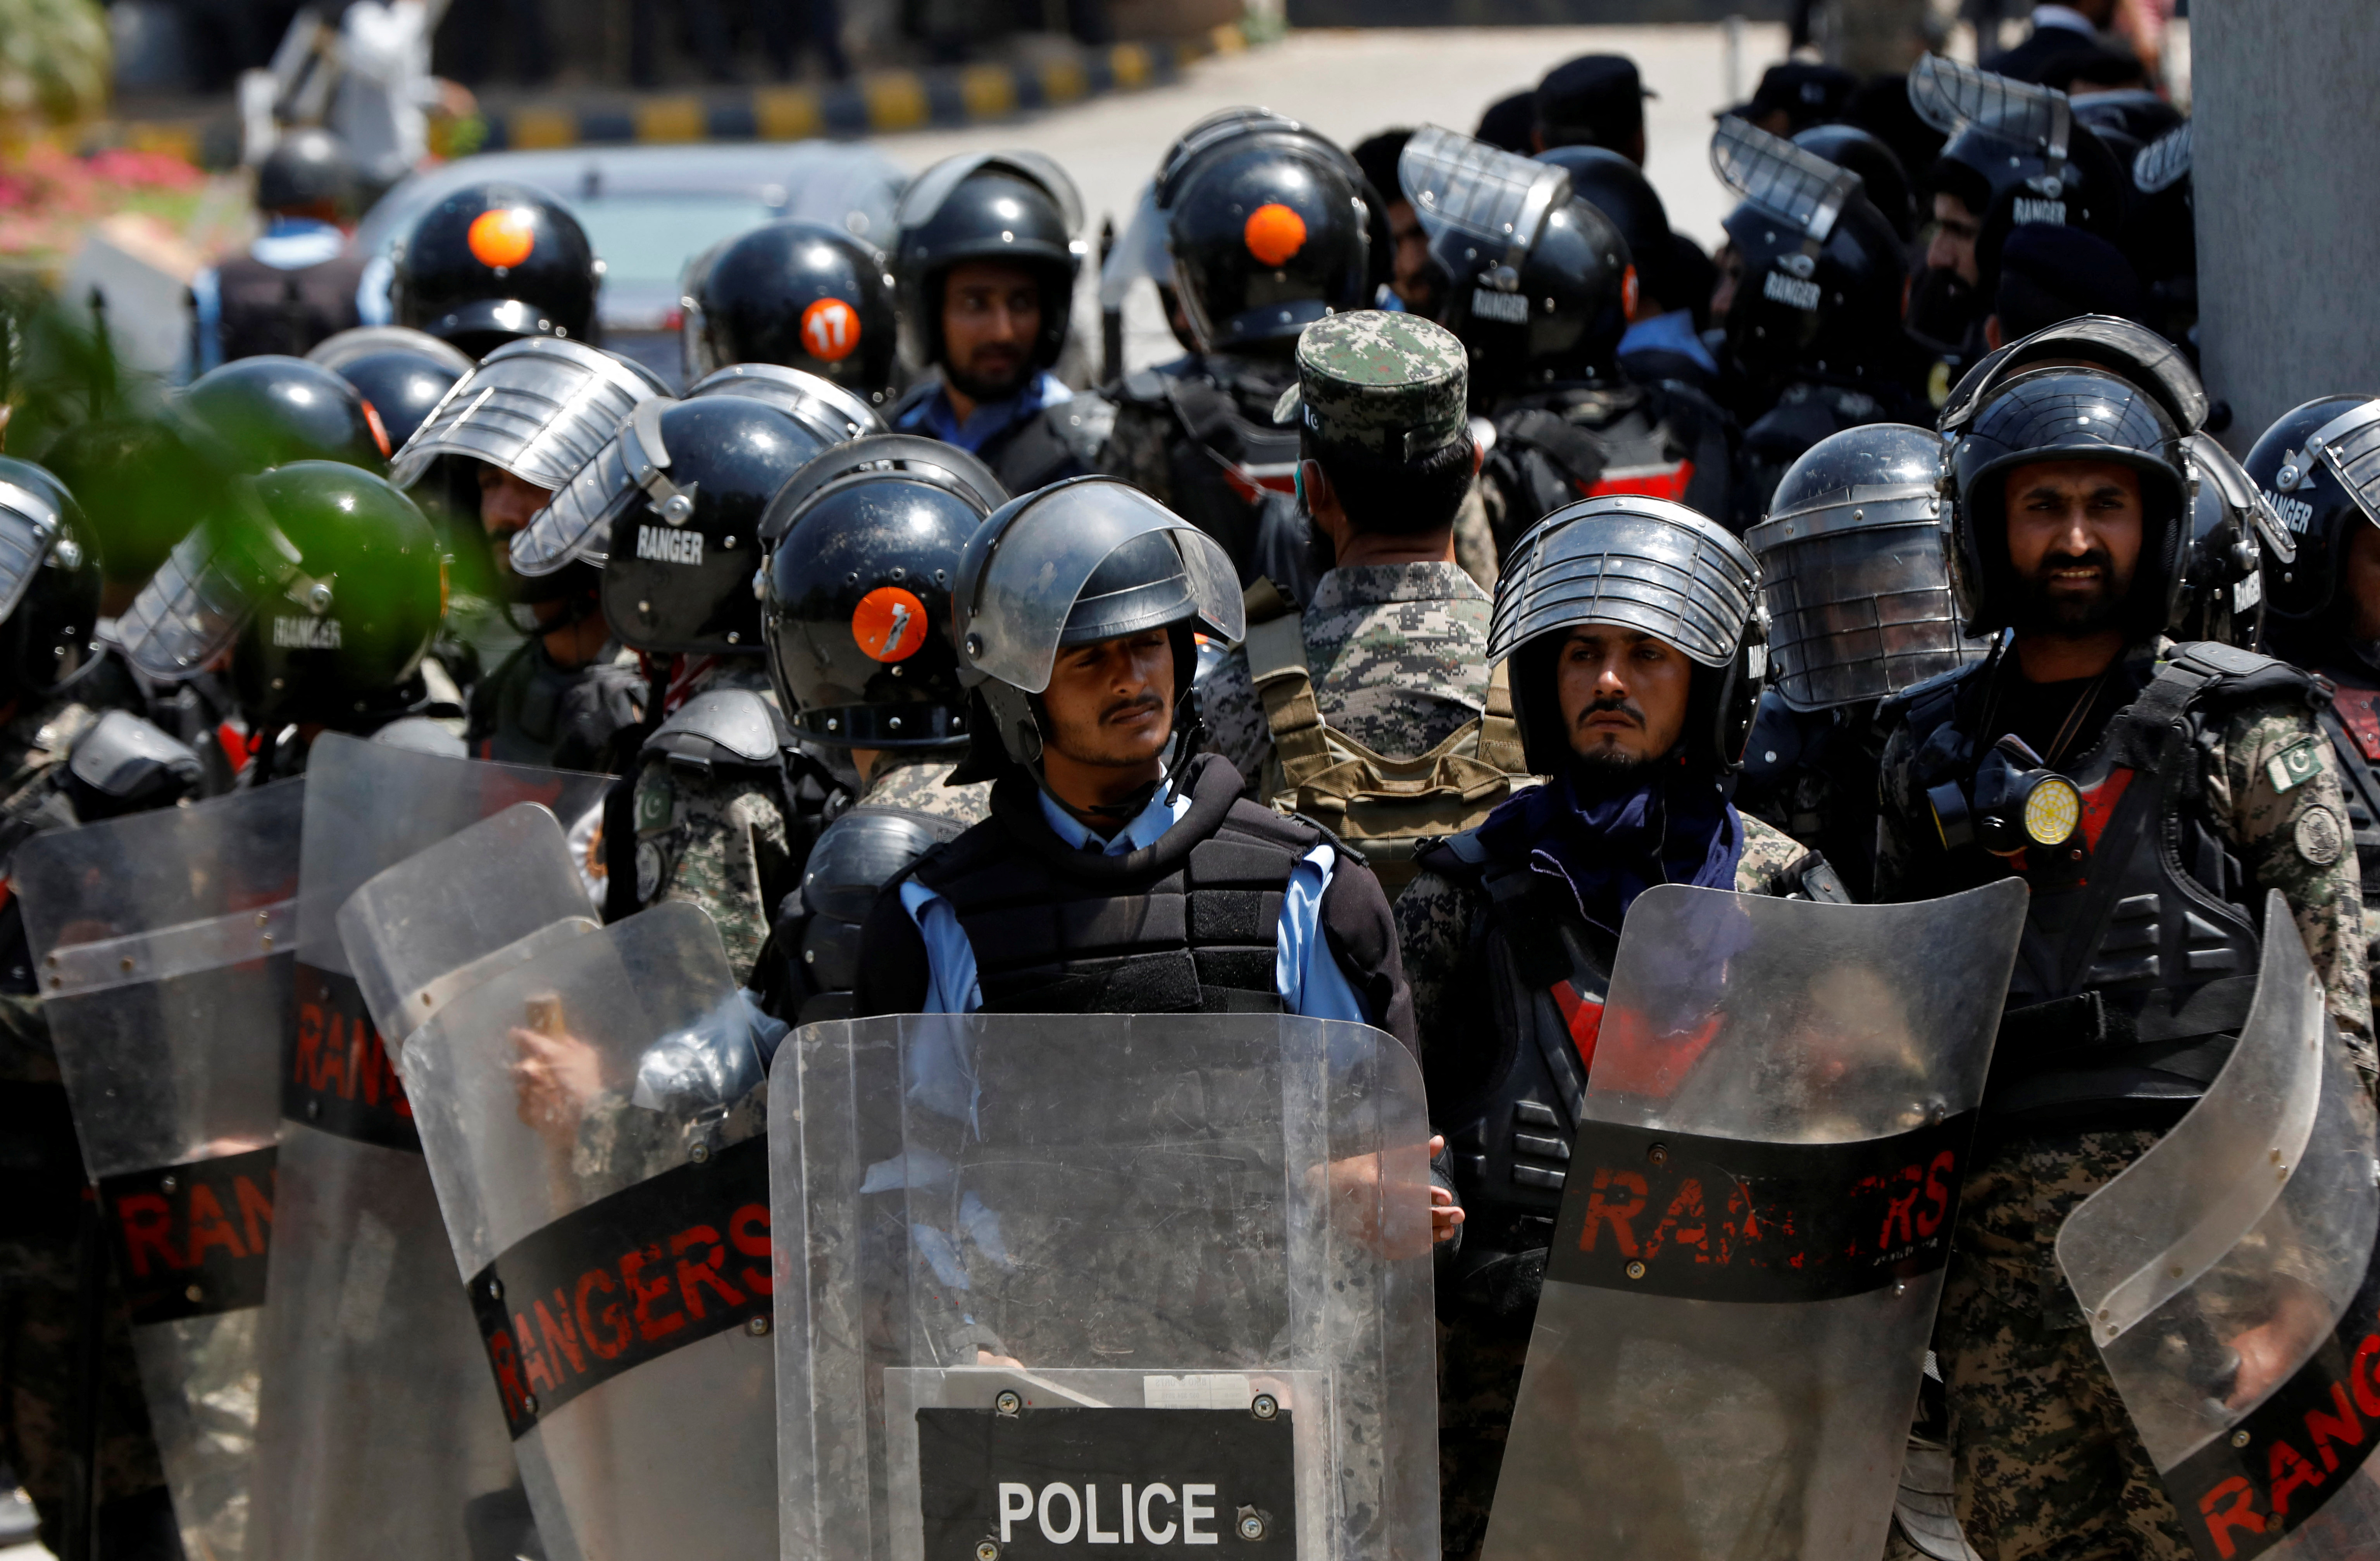 La detención de Khan desató dos días de caos (REUTERS/Akhtar Soomro)